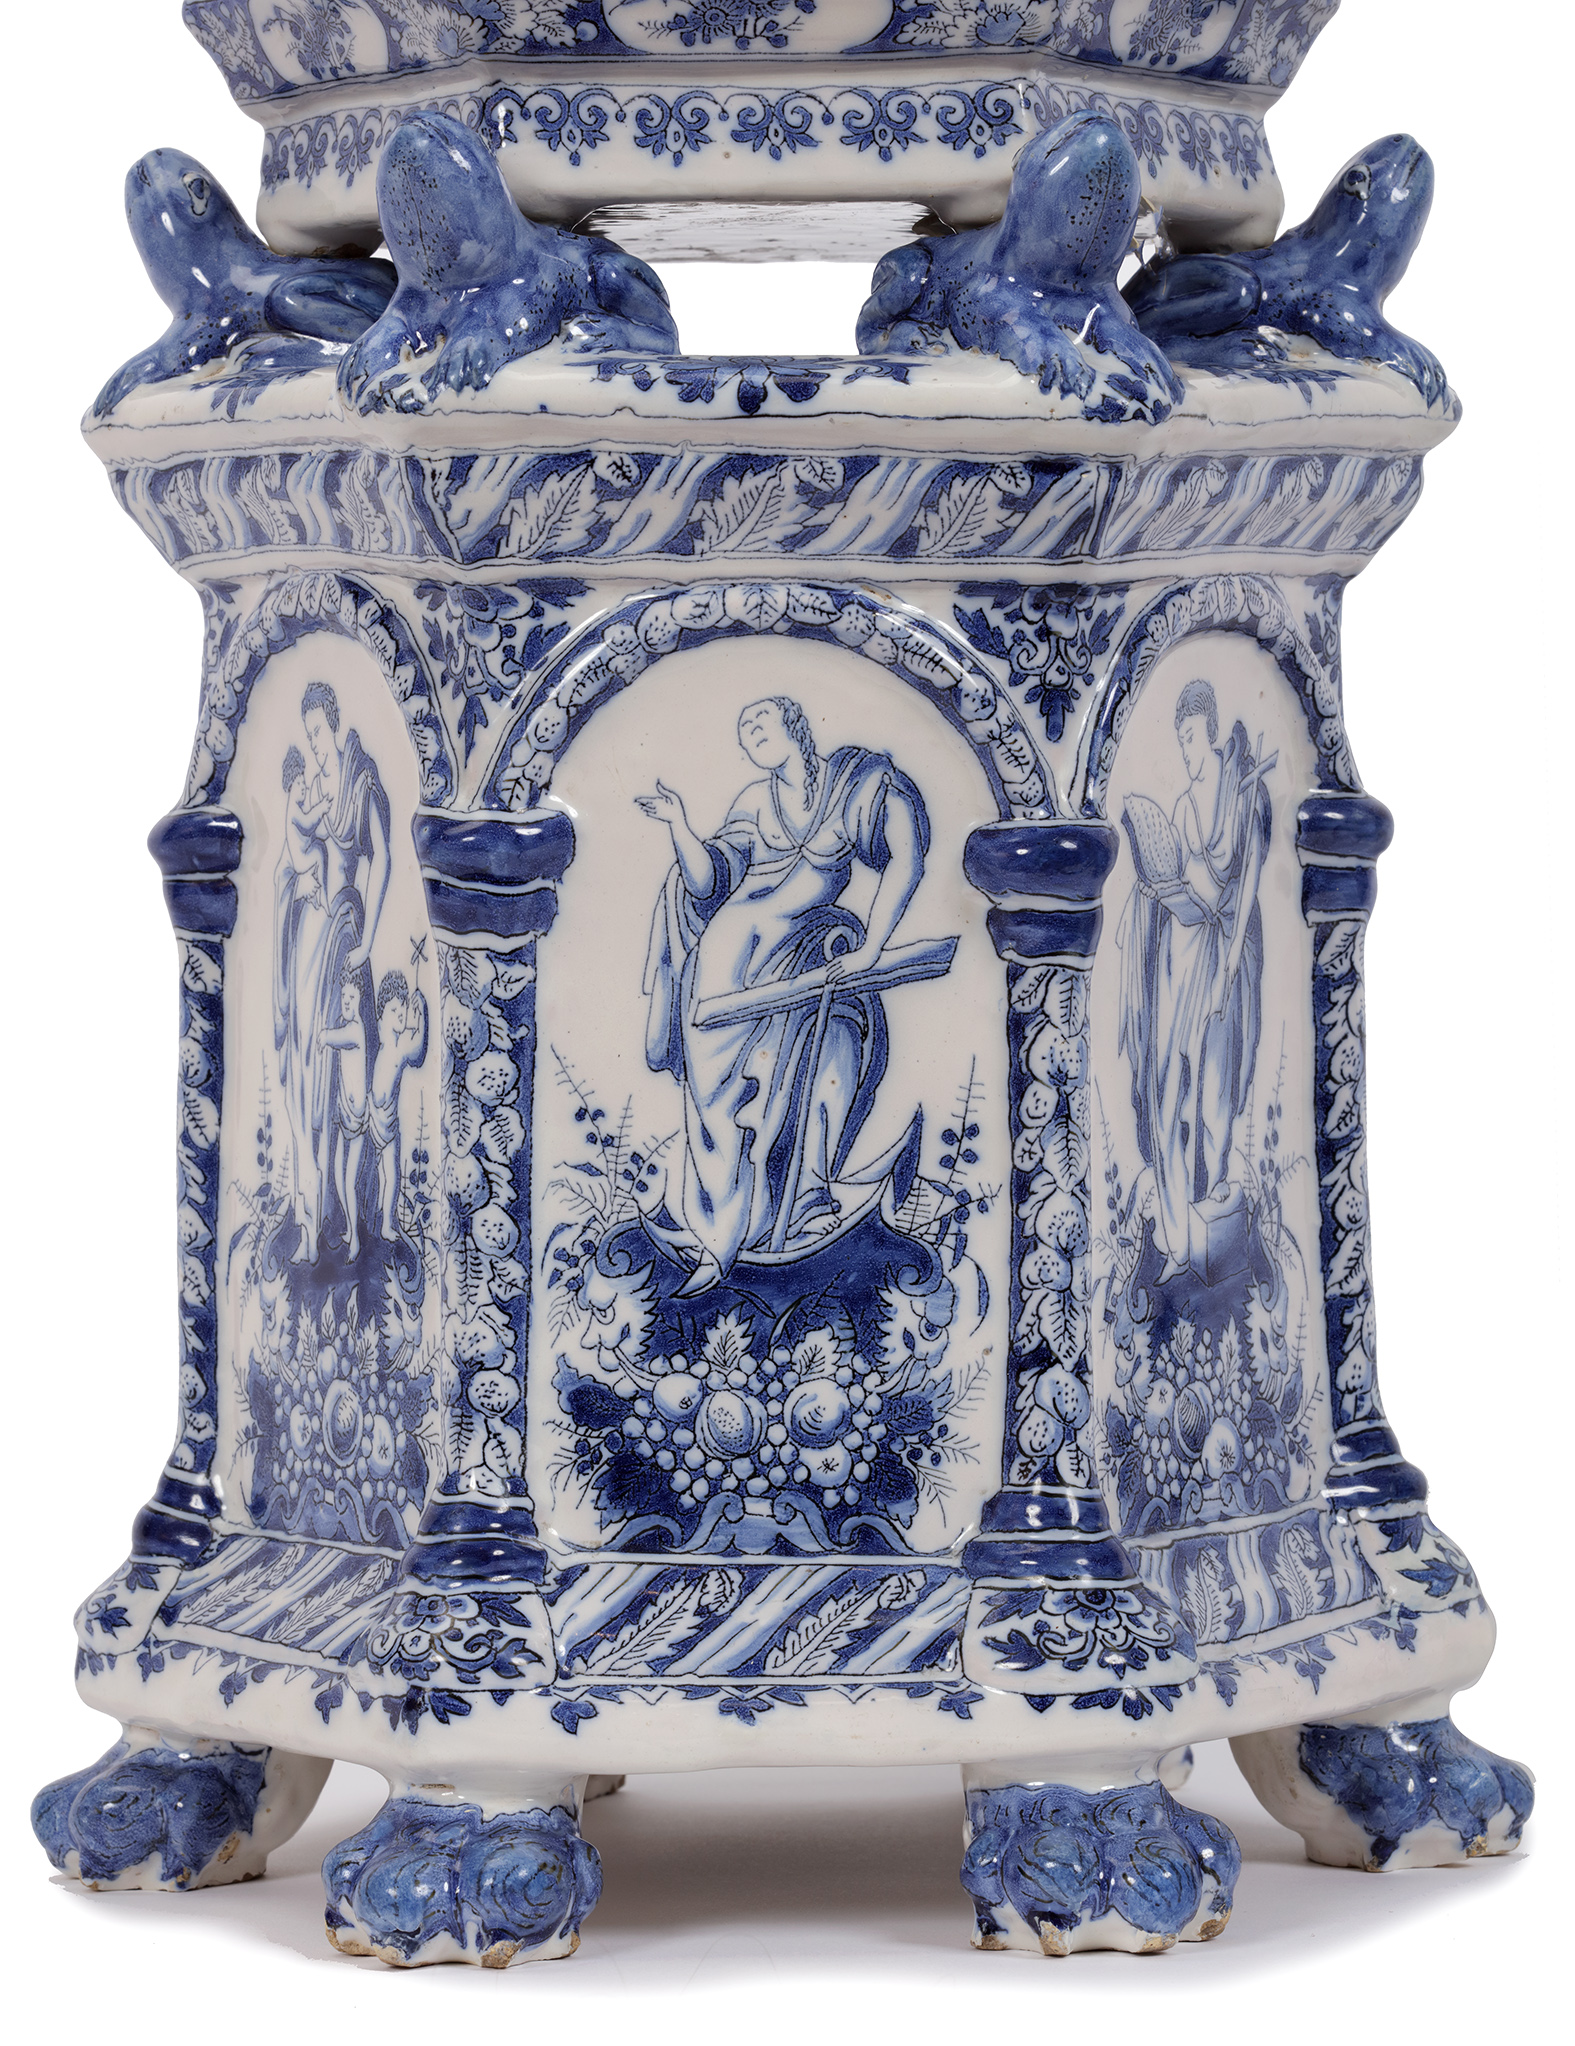 D2392 Blue and White Pyramidal Flower Vase, Adrianus Kocx, The Greek A, Delft, circa 1690